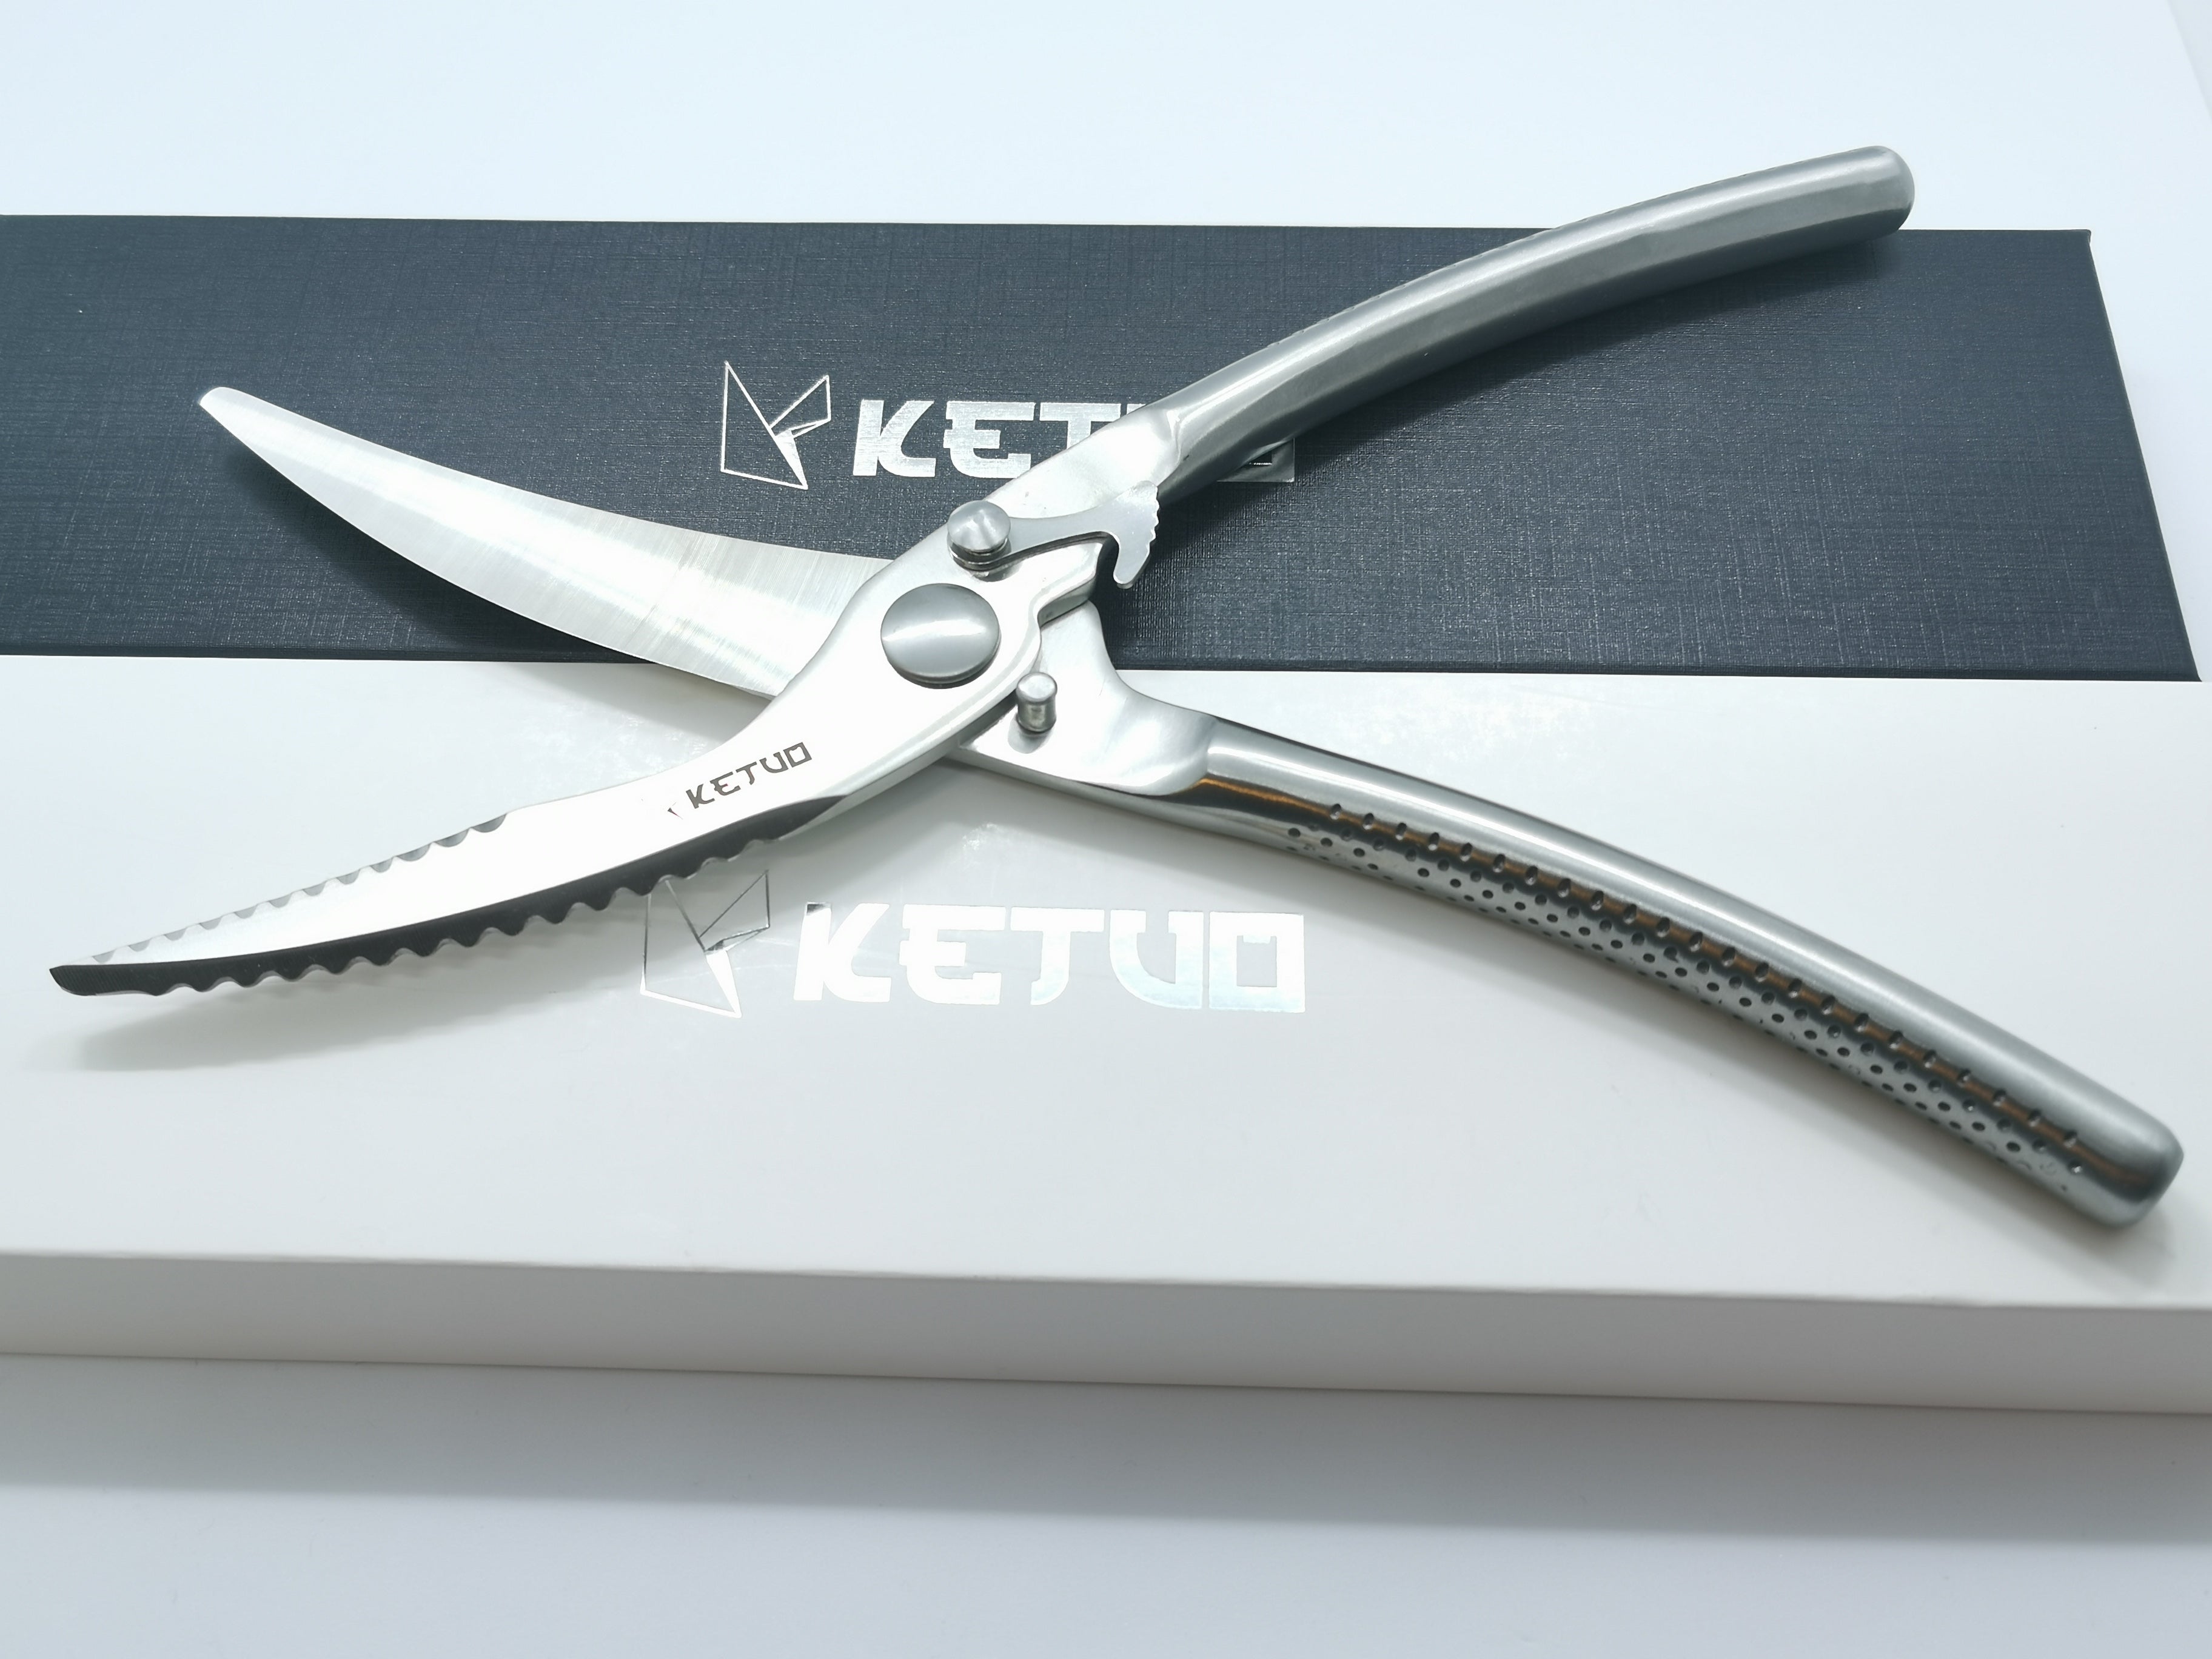 Ketuo Knife - KTSA-01 Kitchen Shears